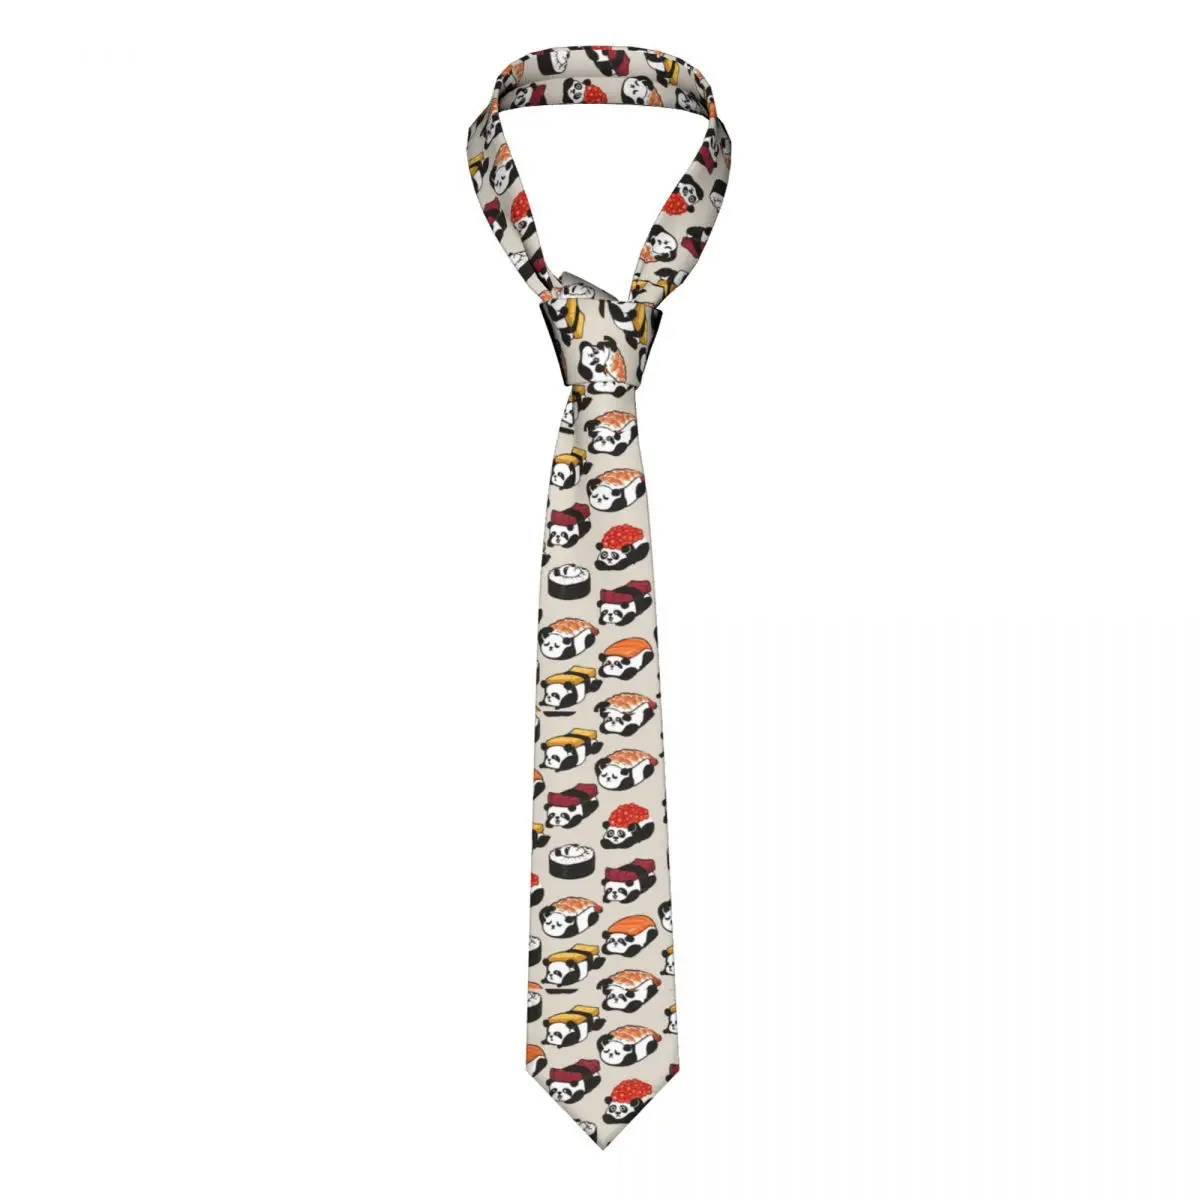 

Sushi Panda Unisex Neckties Silk Polyester 8 cm Classic Animal Neck Ties for Mens Daily Wear Gravatas Wedding Accessories Gift